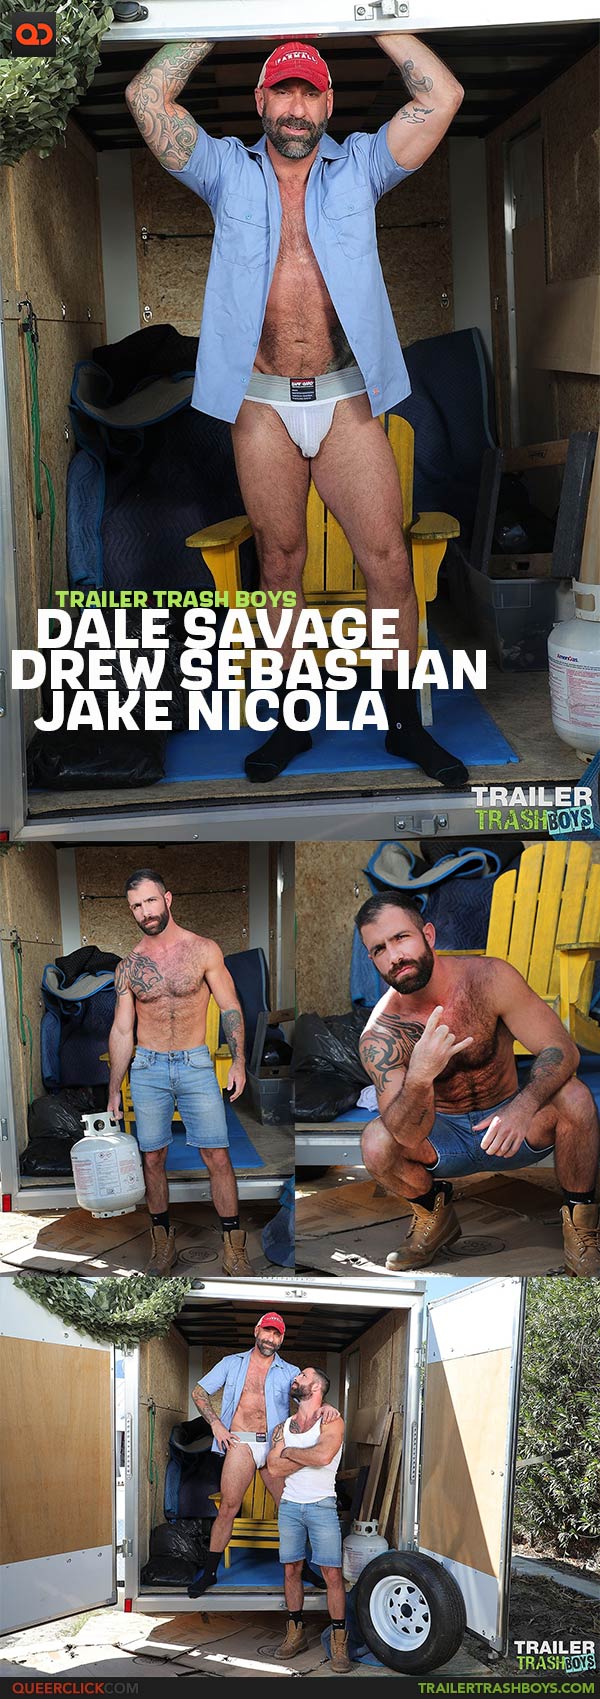 Trailer Trash Boys:  Dale Savage, Drew Sebastian and Jake Nicola